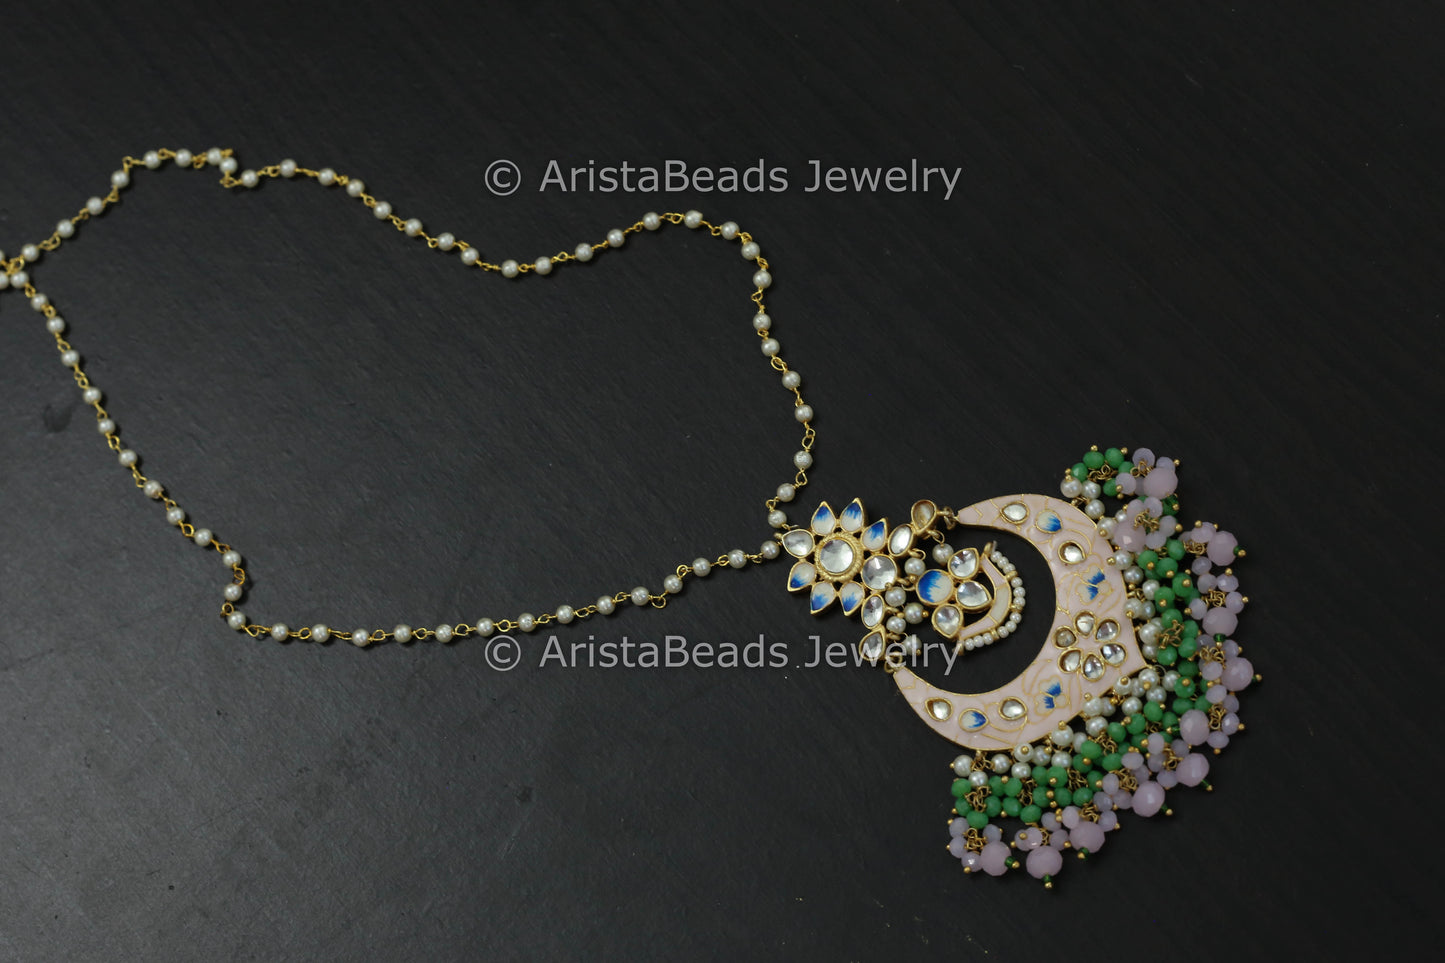 Handmade Mala Necklace With Enamel Pendant - Blush Pink